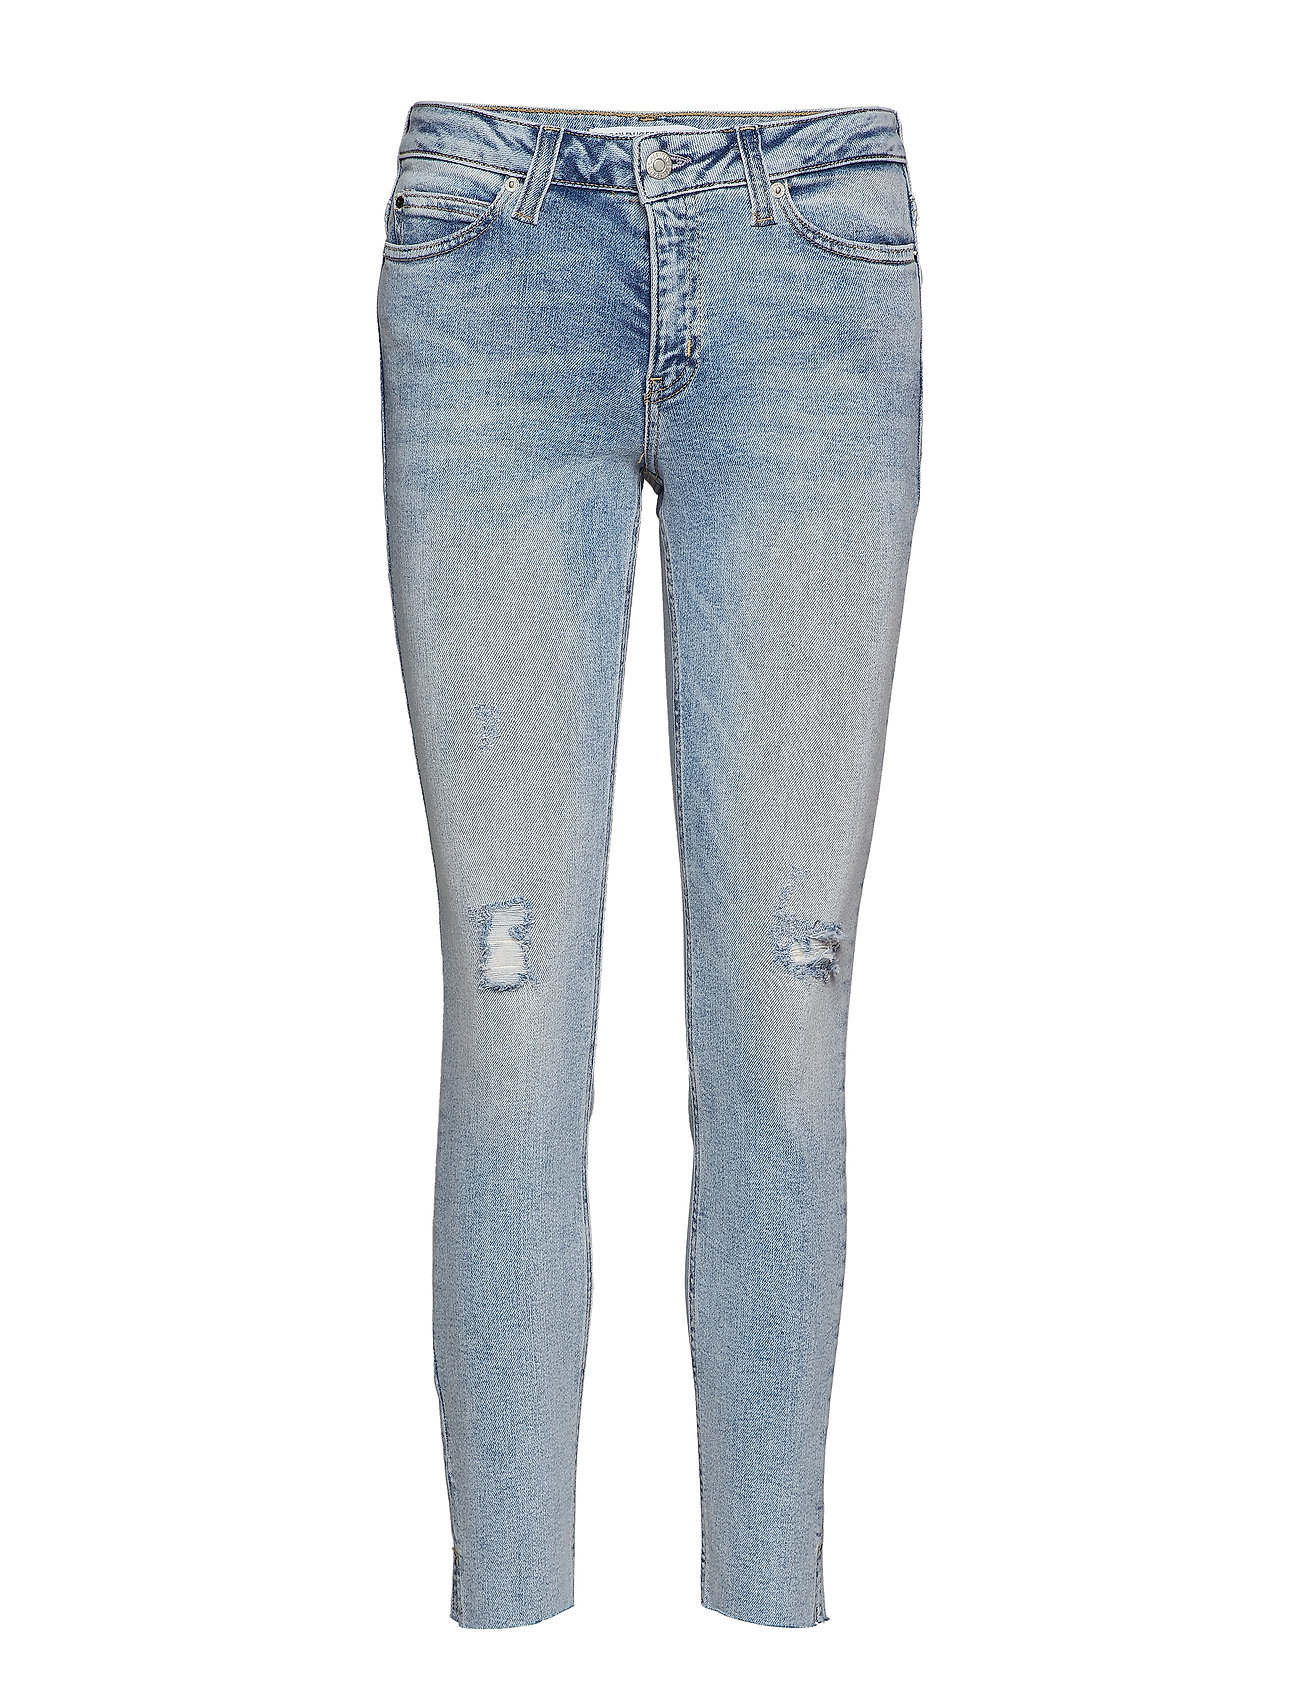 calvin klein jeans super skinny